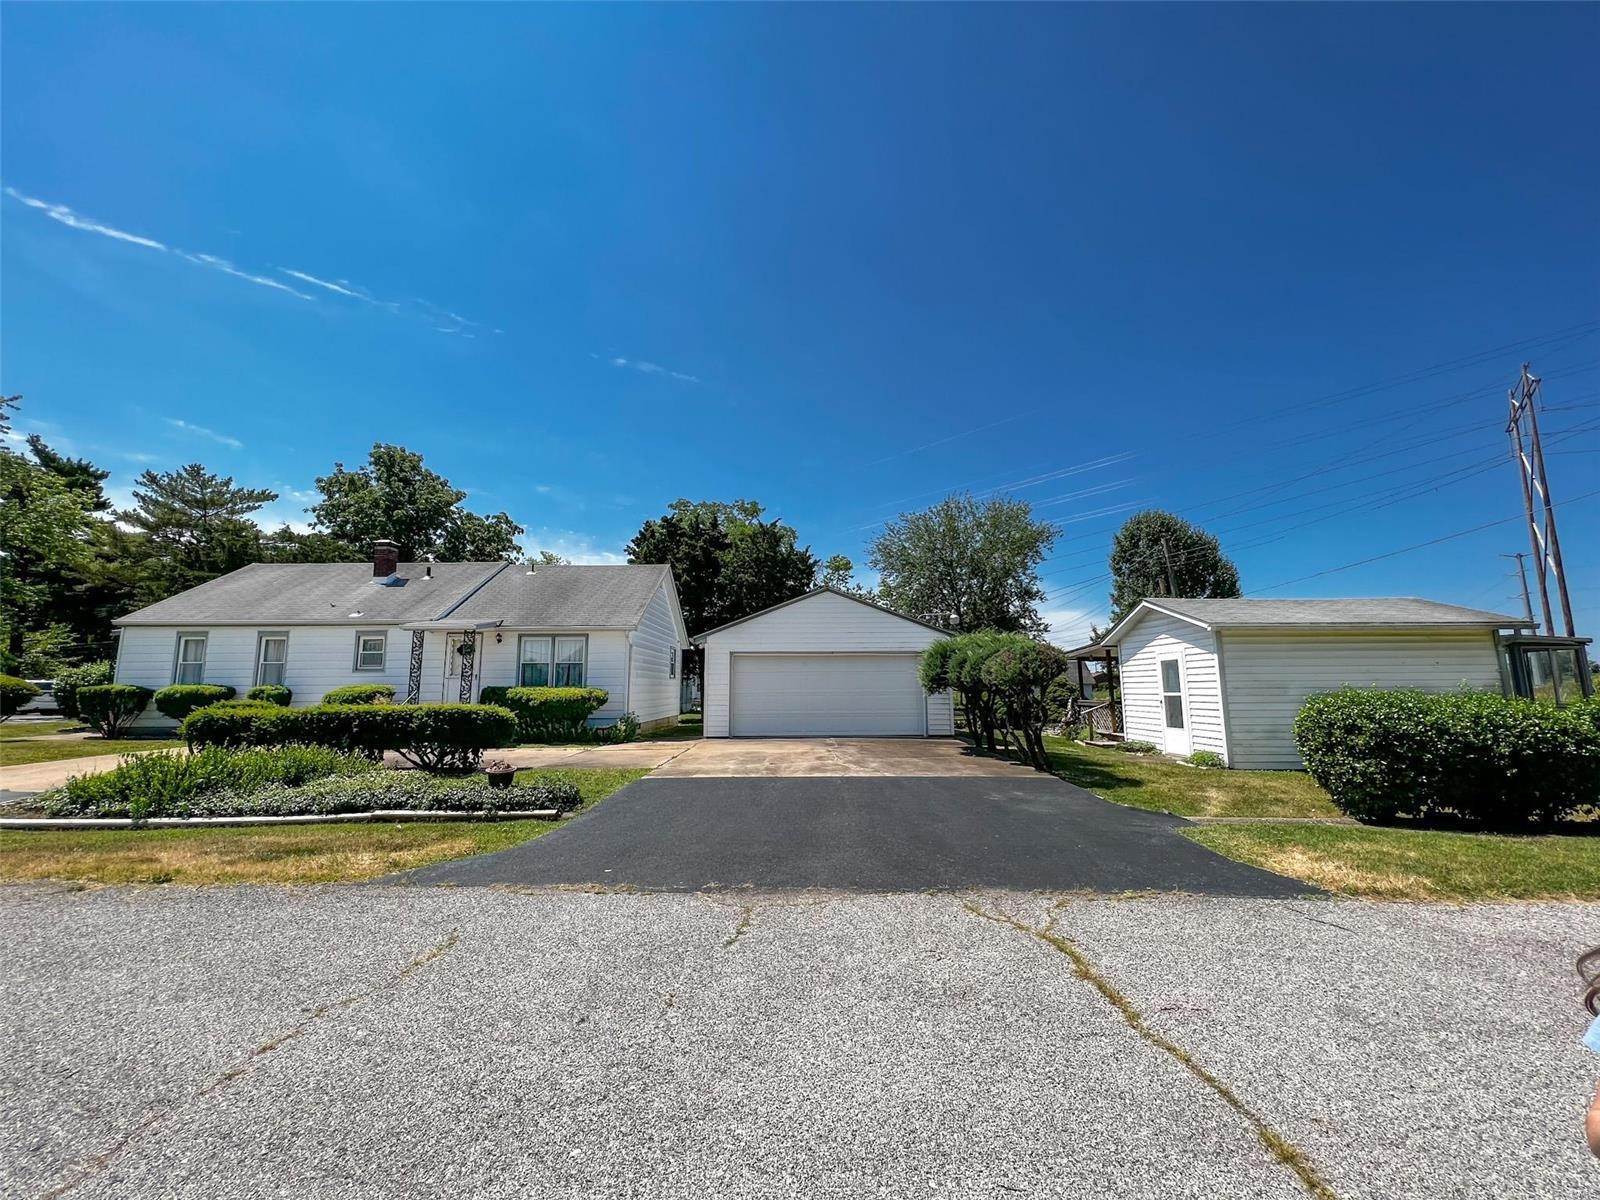 Property for Sale at 801 Vine Street Cahokia, Illinois 62206 United States